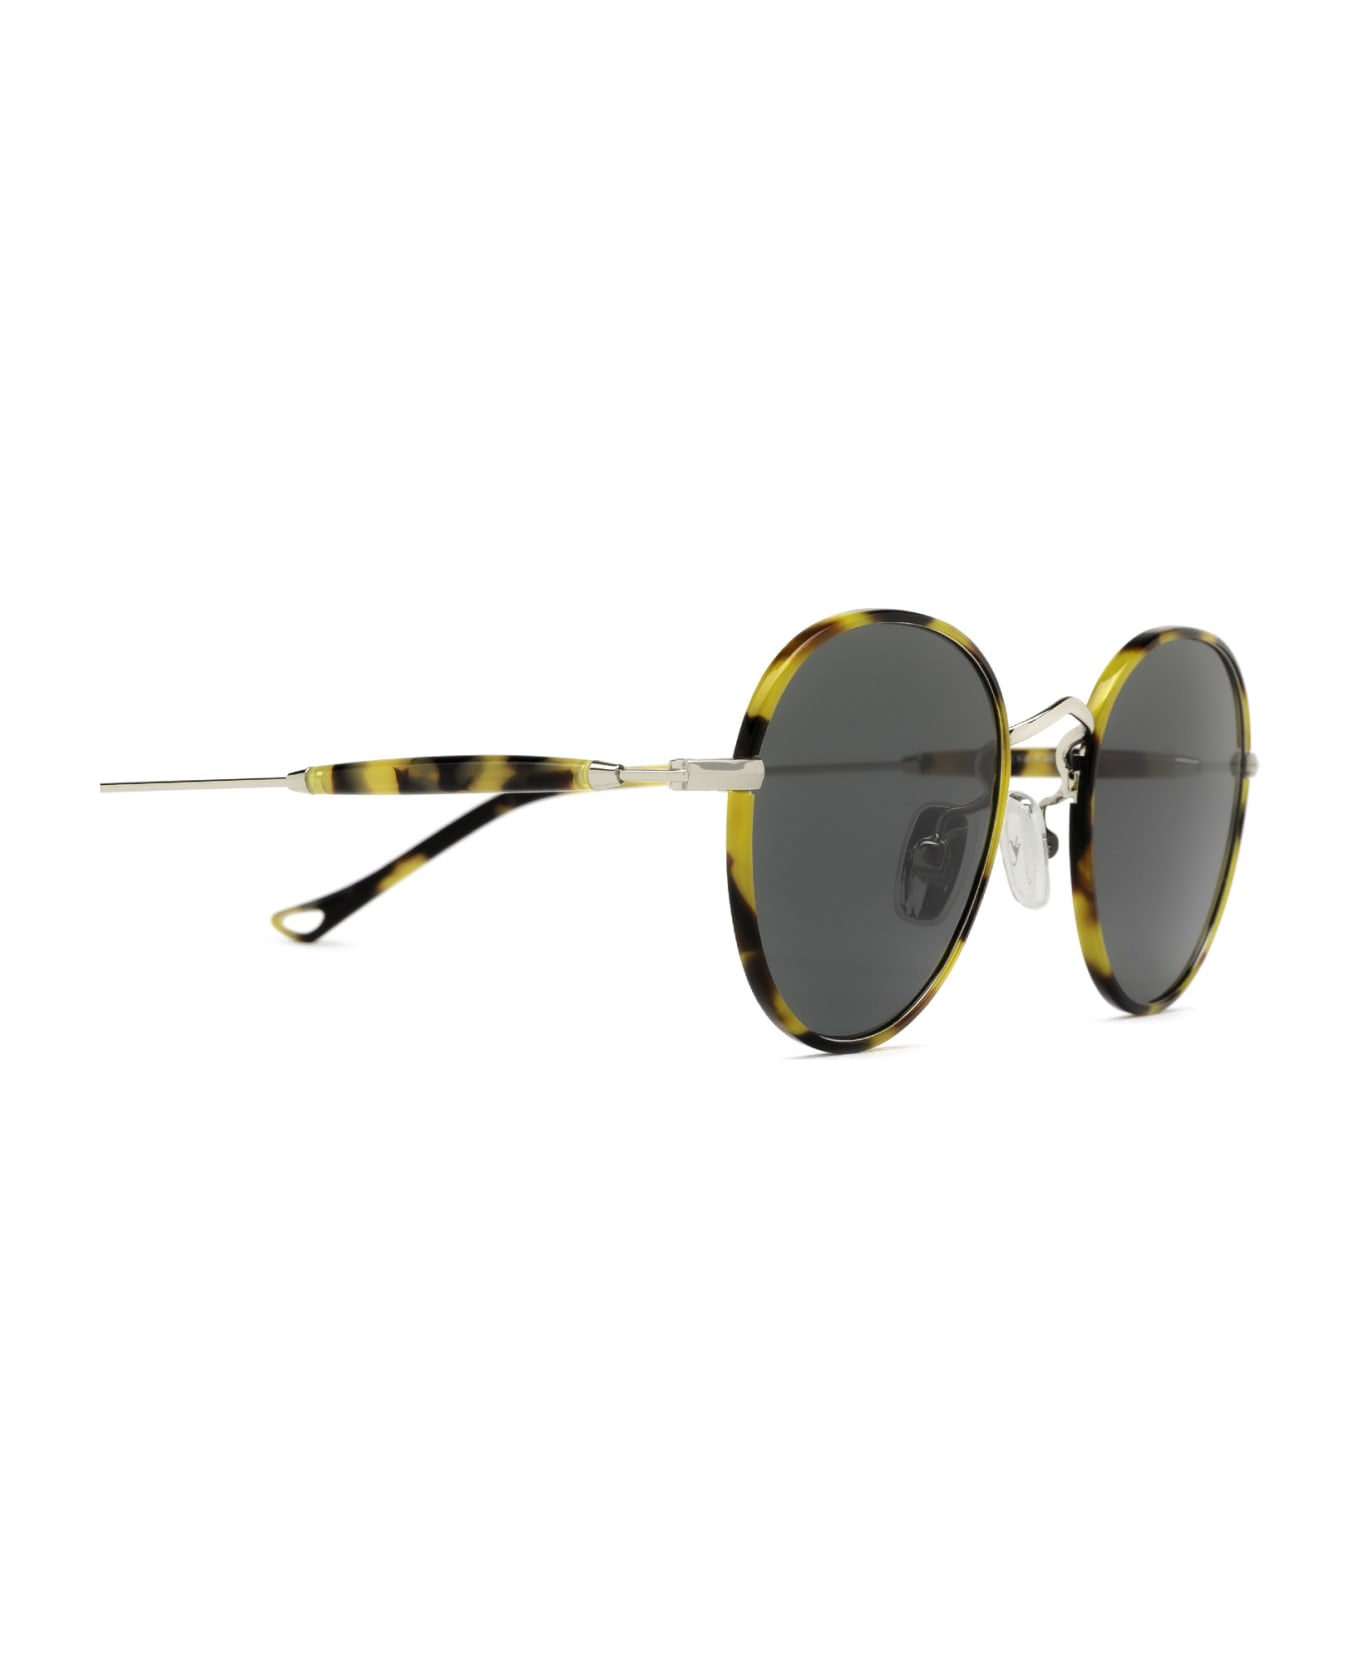 Eyepetizer Cinq Havana Sunglasses - Havana サングラス